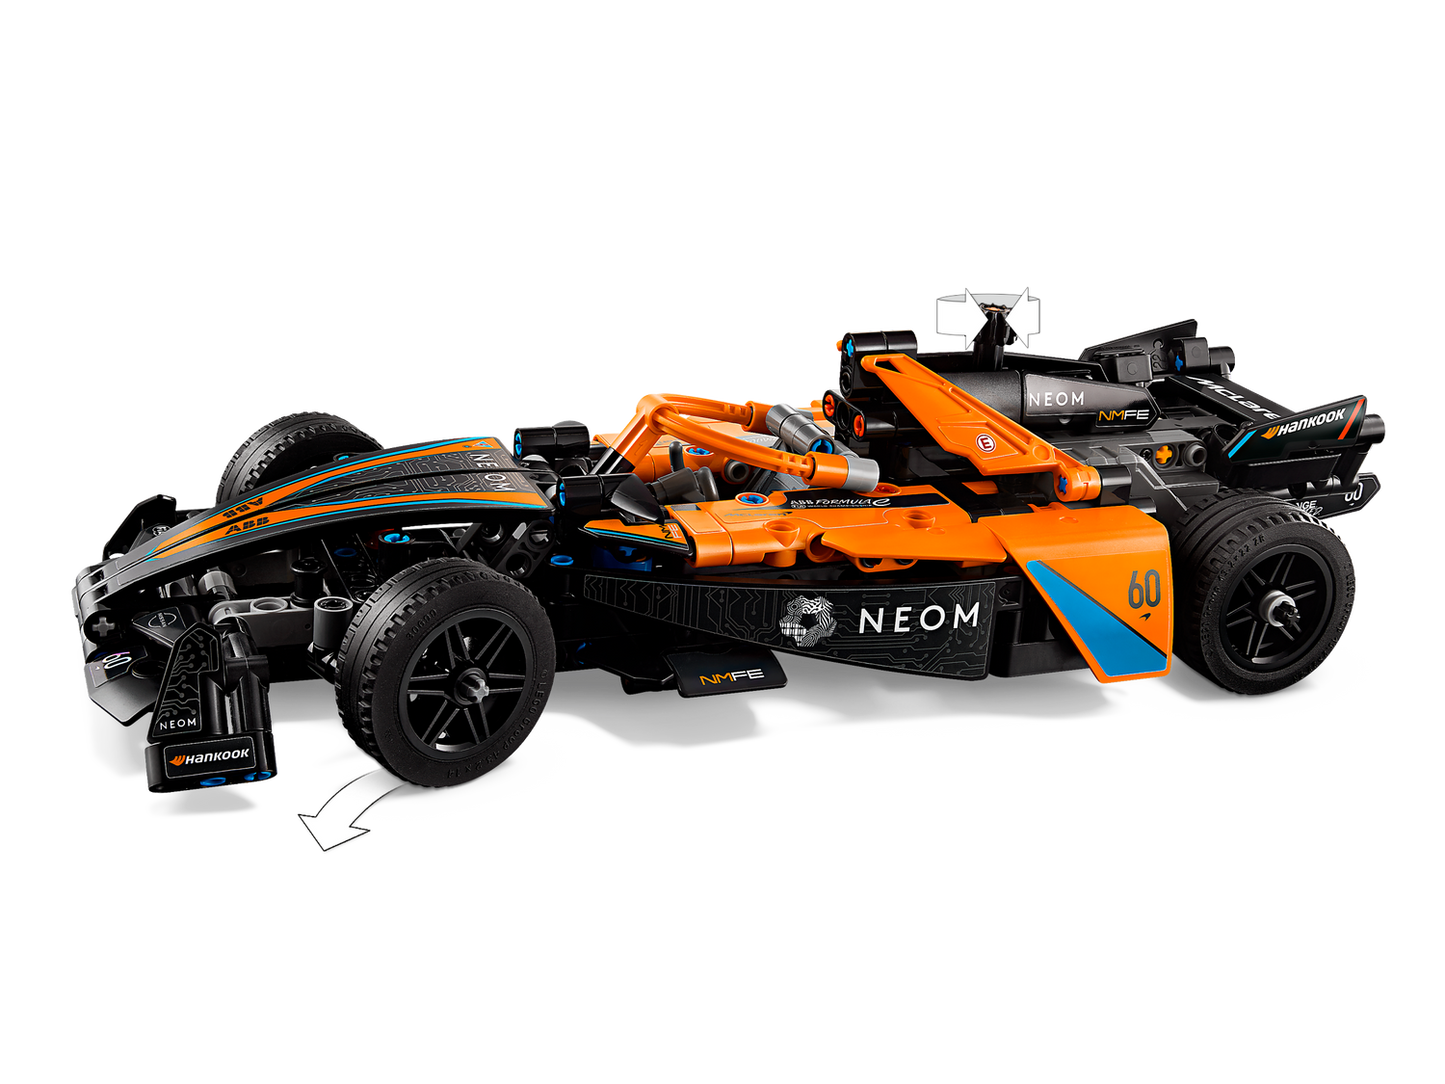 Technic 42169 NEOM McLaren Formula E Race Car